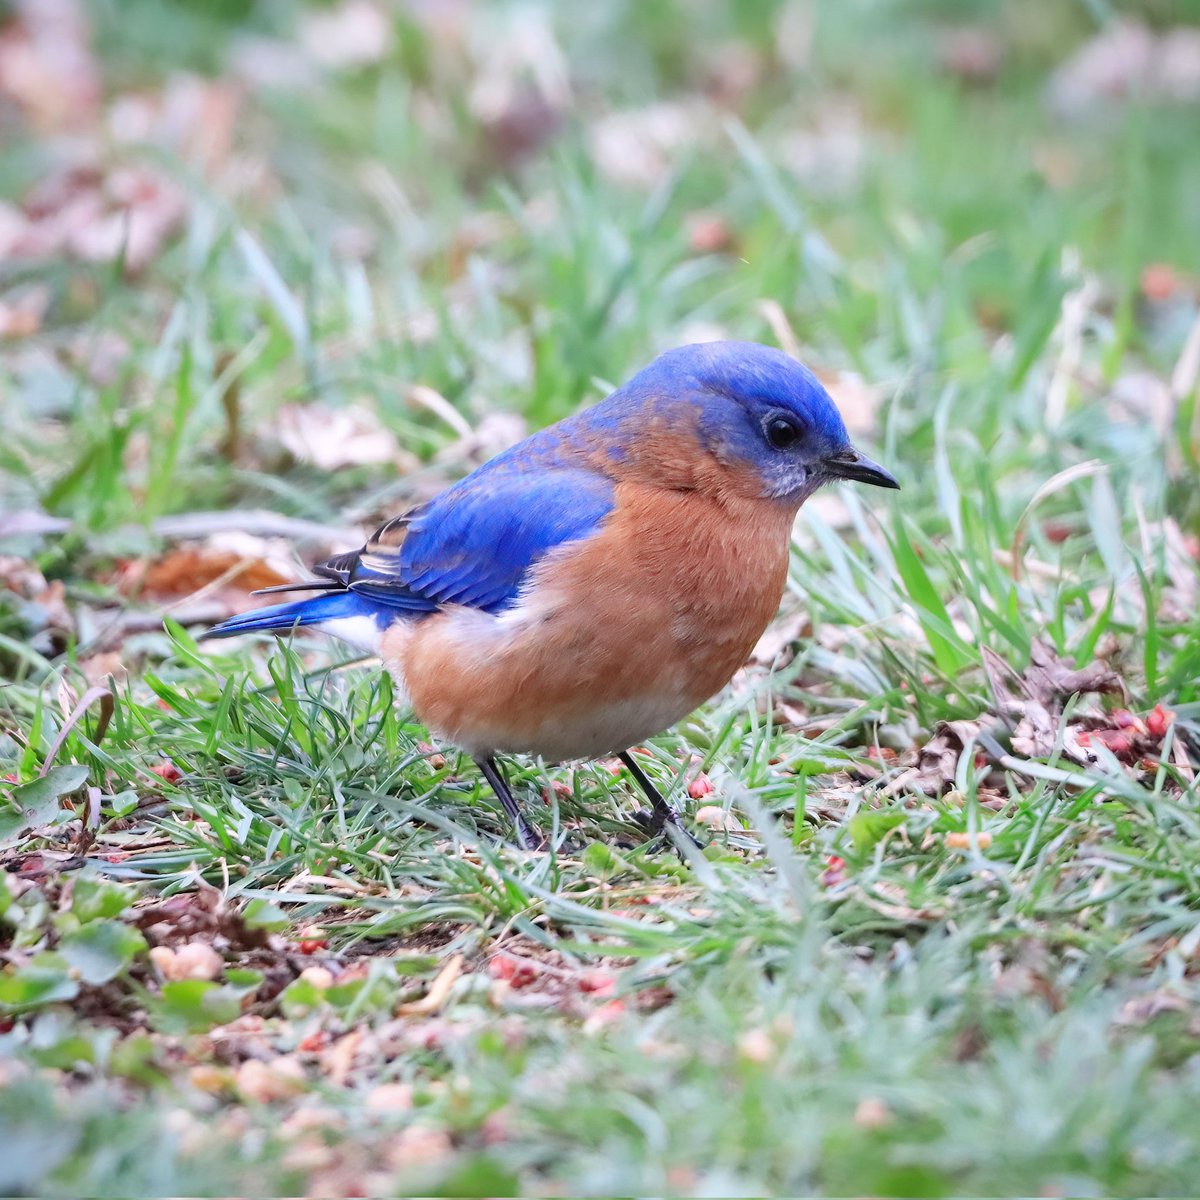 A beautiful male bluebird forages for a meal...
#beautifulbluebird #beautiful #bluebirds #bluebird #birdlife #bluebirdactivities #ohiobirding #ohiobirder #ohiobackyardbirding #ohiobirdworld #birdloversclub #ohiobirdlovers #birdlovers